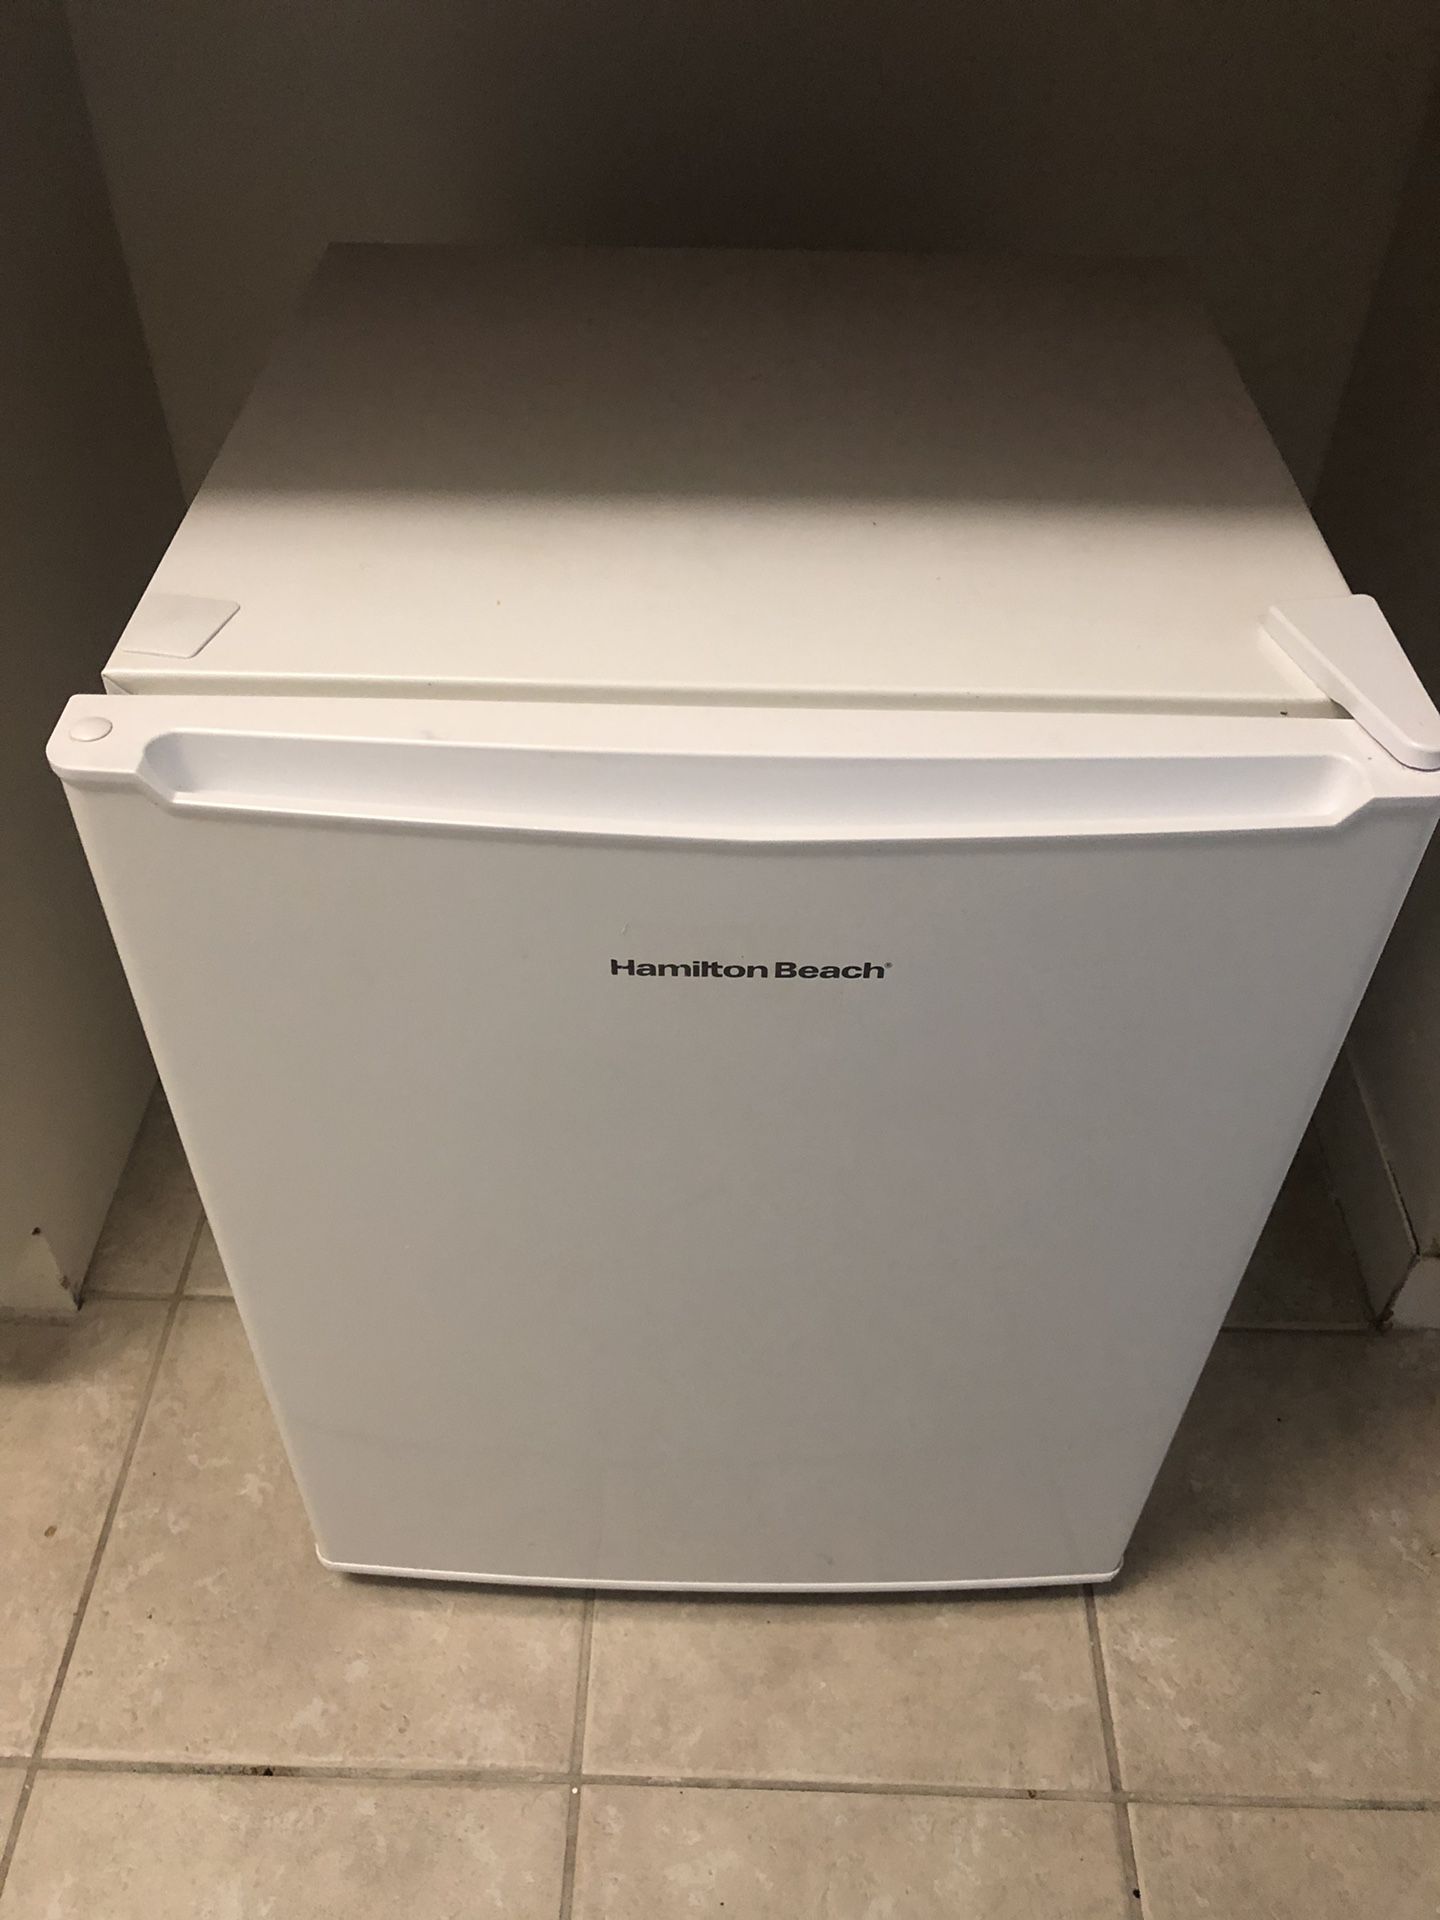 Refrigerator (Compact) with Freezer $50